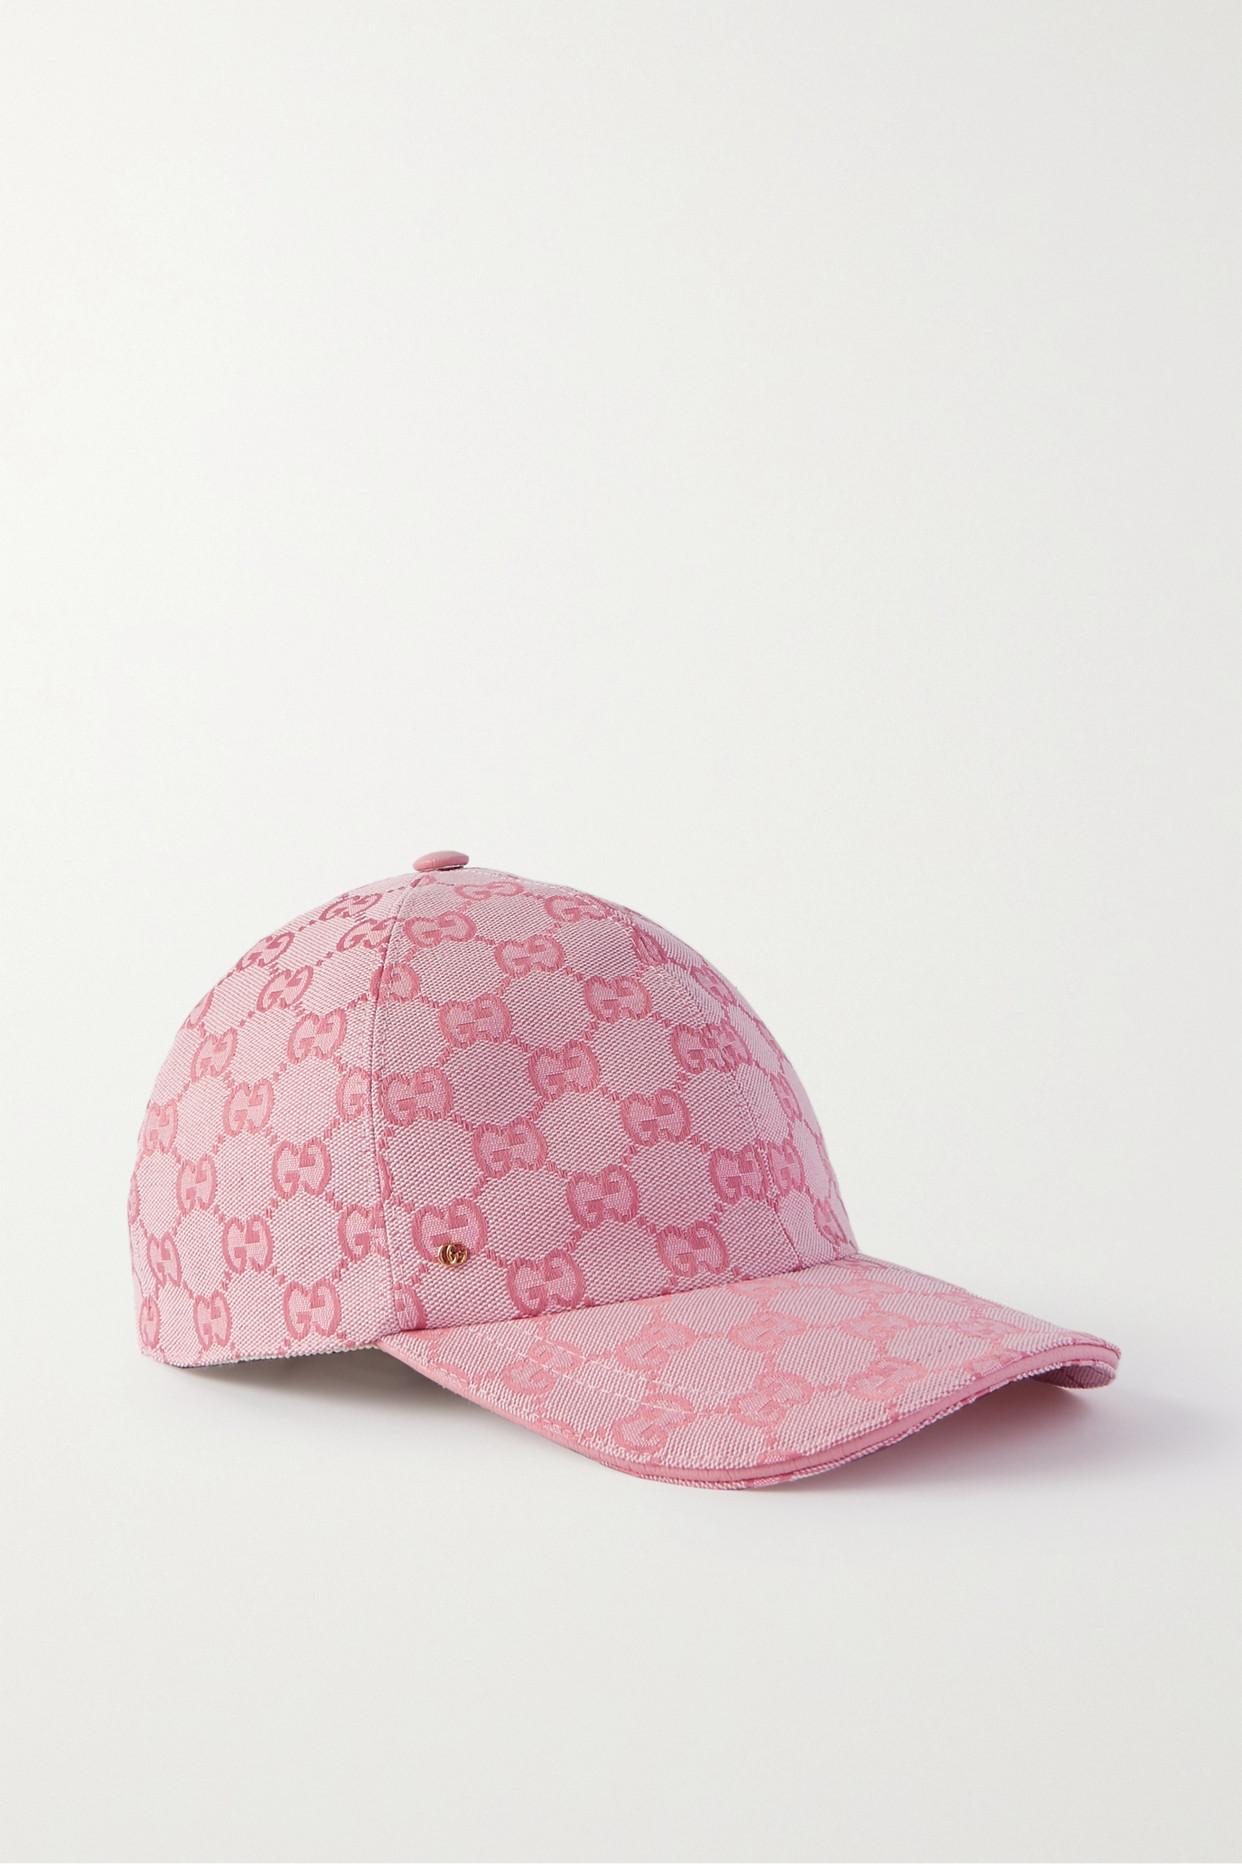 Besmettelijke ziekte aankomst Hoelahoep Gucci Leather-trimmed Cotton-blend Canvas-jacquard Baseball Cap in Pink |  Lyst